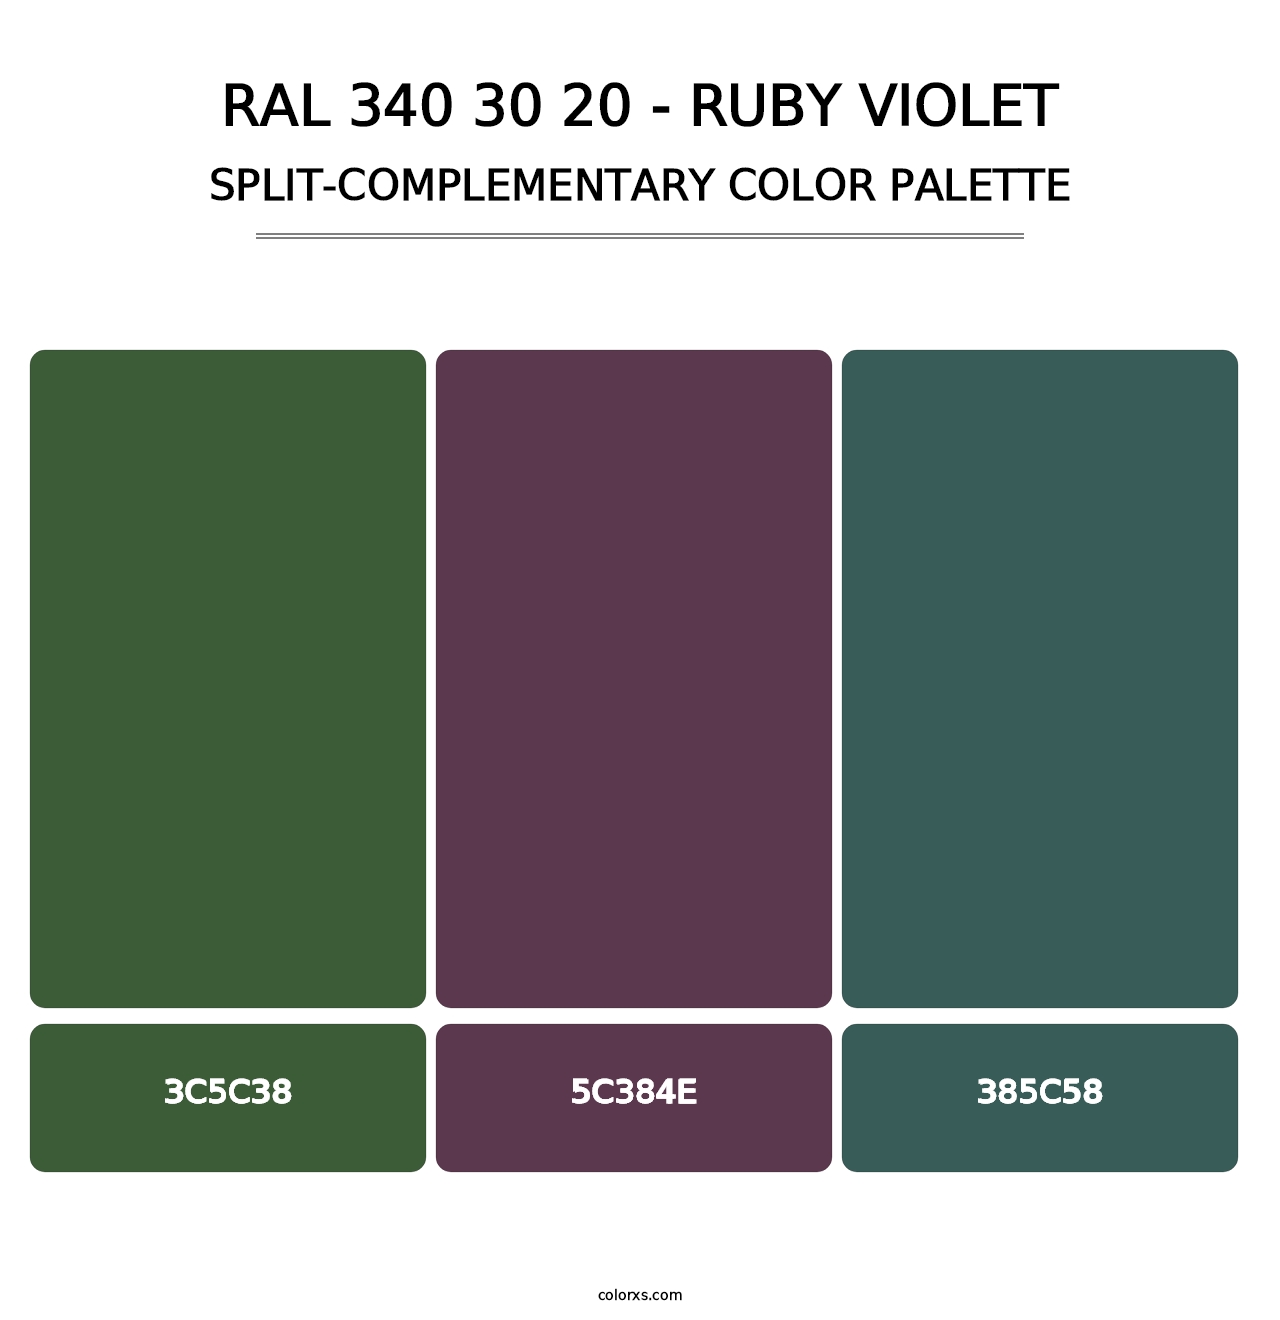 RAL 340 30 20 - Ruby Violet - Split-Complementary Color Palette